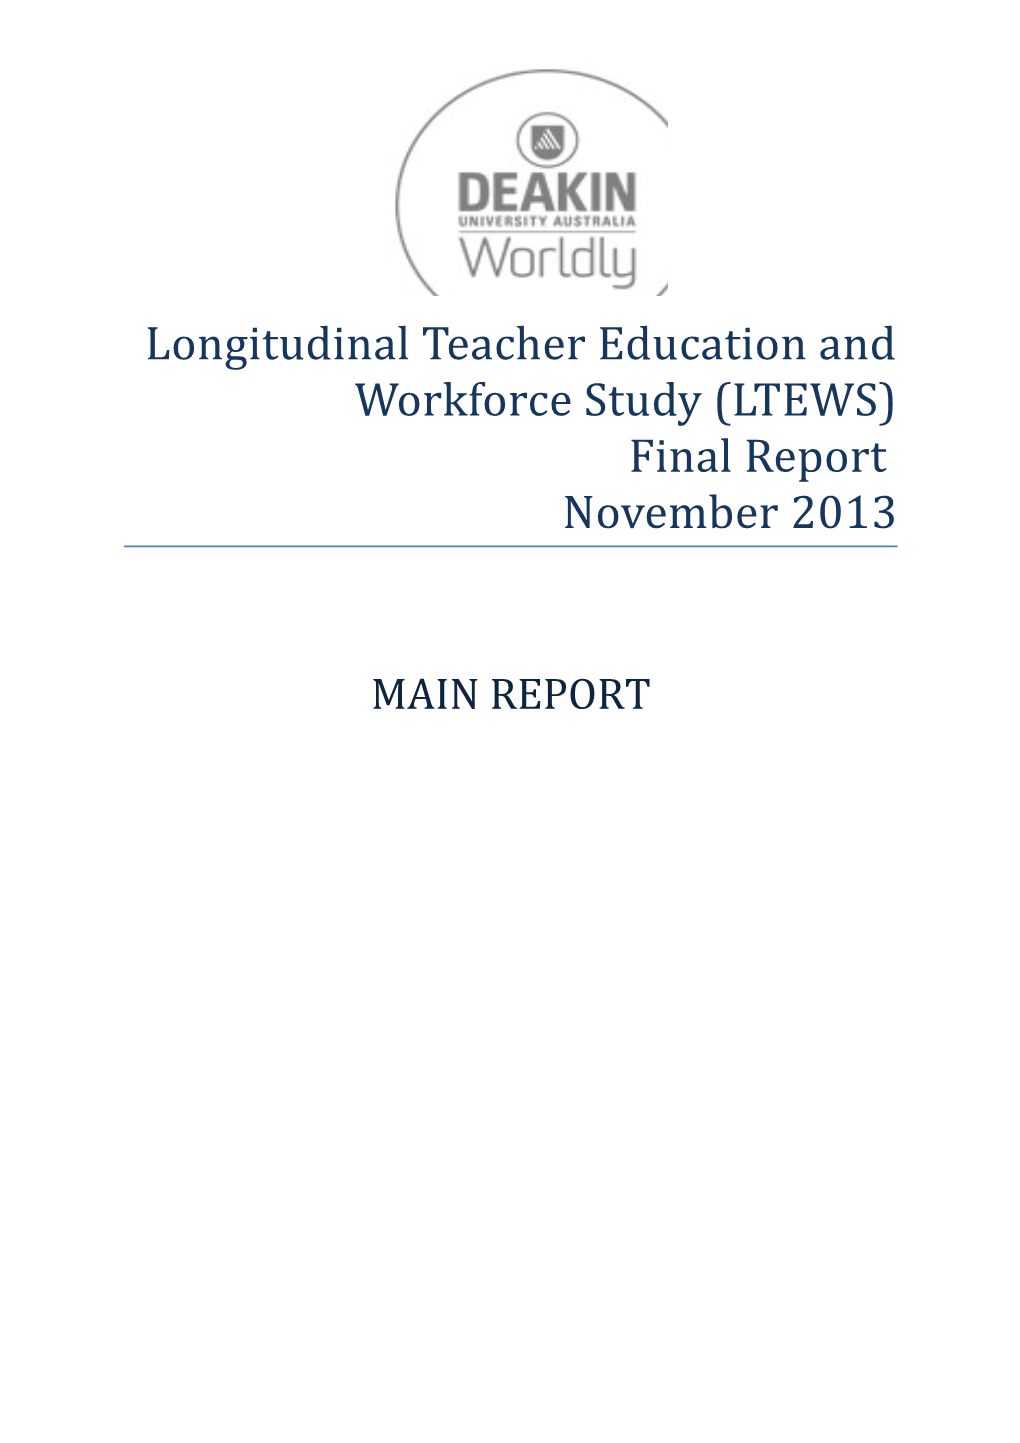 Longitudinal Teacher Education and Workforce Study (LTEWS) Final Report